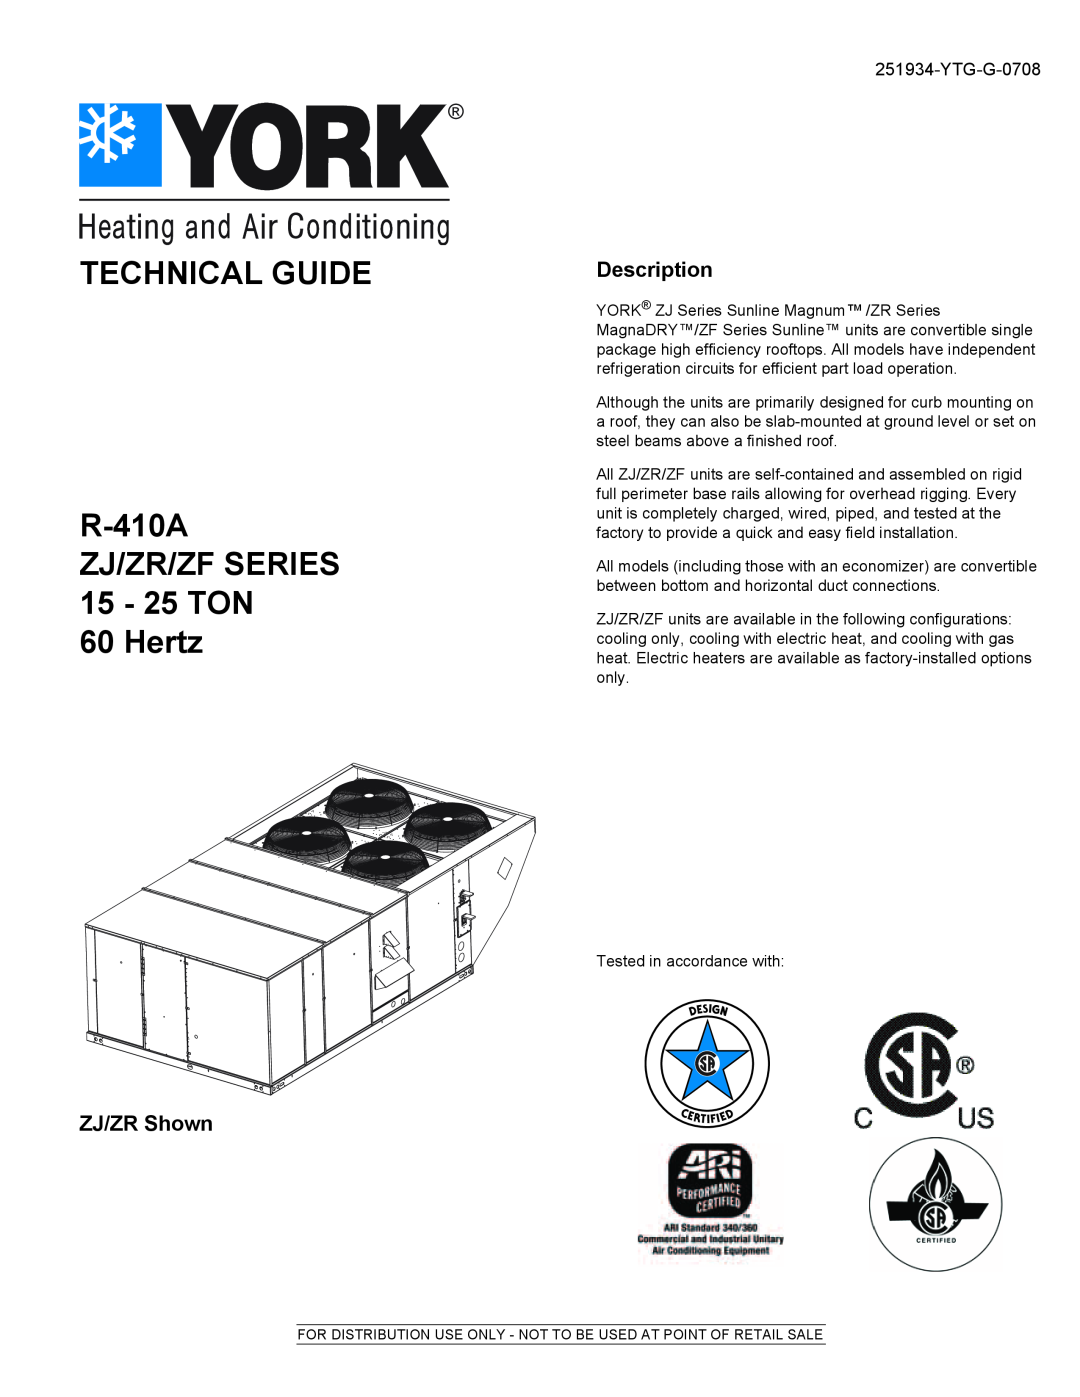 York R-410A dimensions DEY060, DEX024-048, 2-5Ton, List Of Tables, General, Safety Considerations, GZKDJRRJDGHZ2JZFJR 